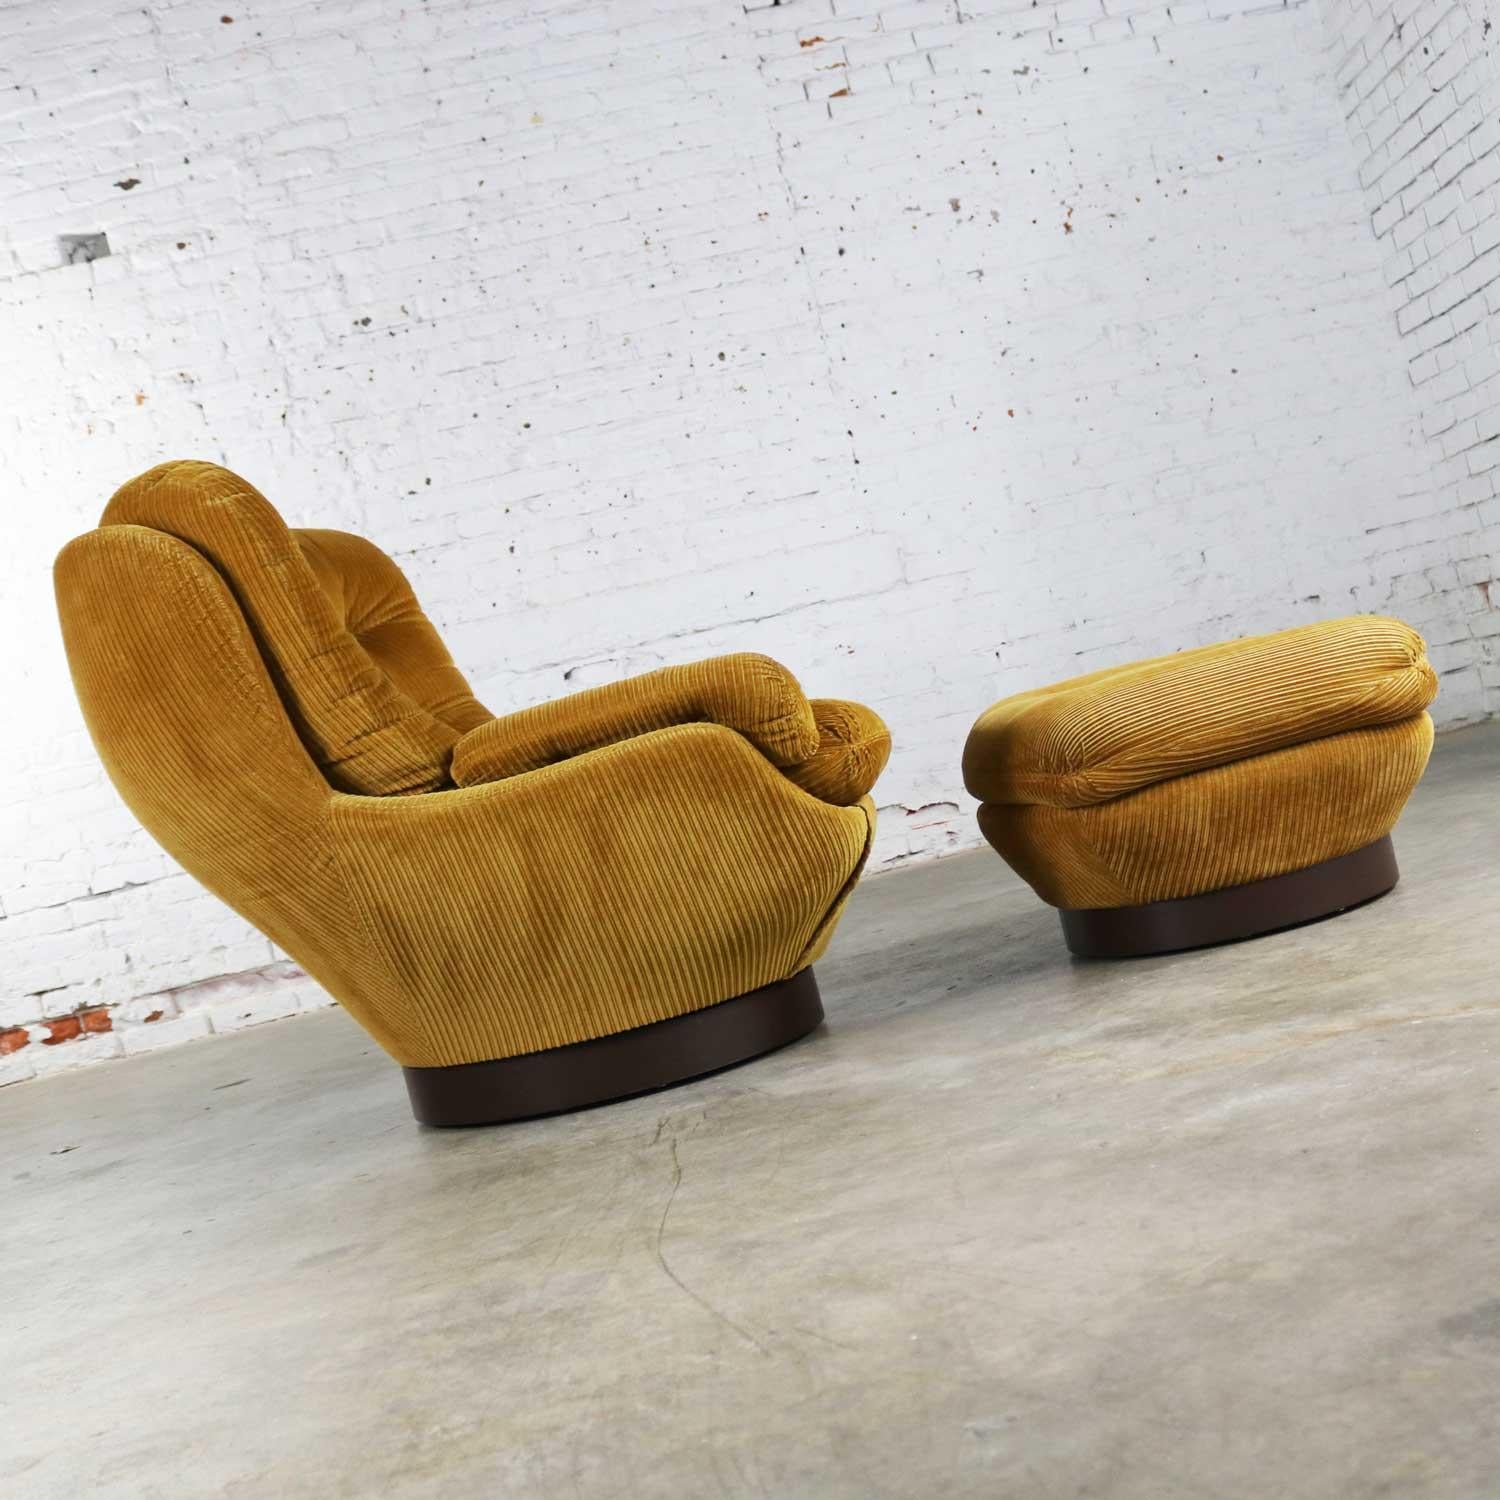 20th Century Vintage Modern Selig Swivel Chair and Ottoman Style of Joe Columbo Elda Chair